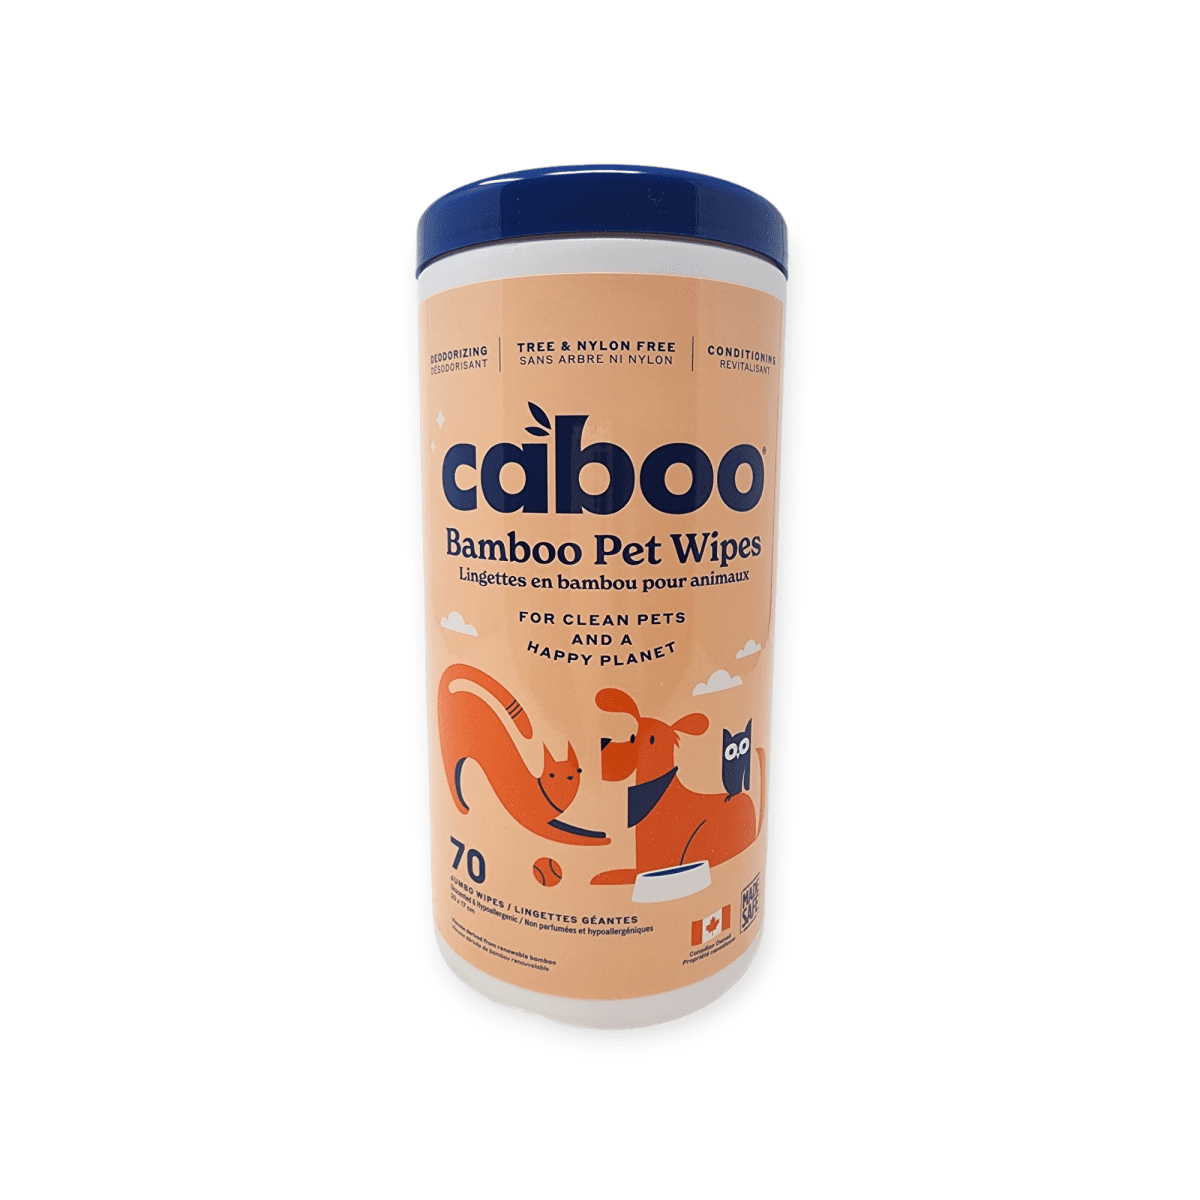 Caboo Bamboo Pet Wipes (70 Jumbo Wipes)